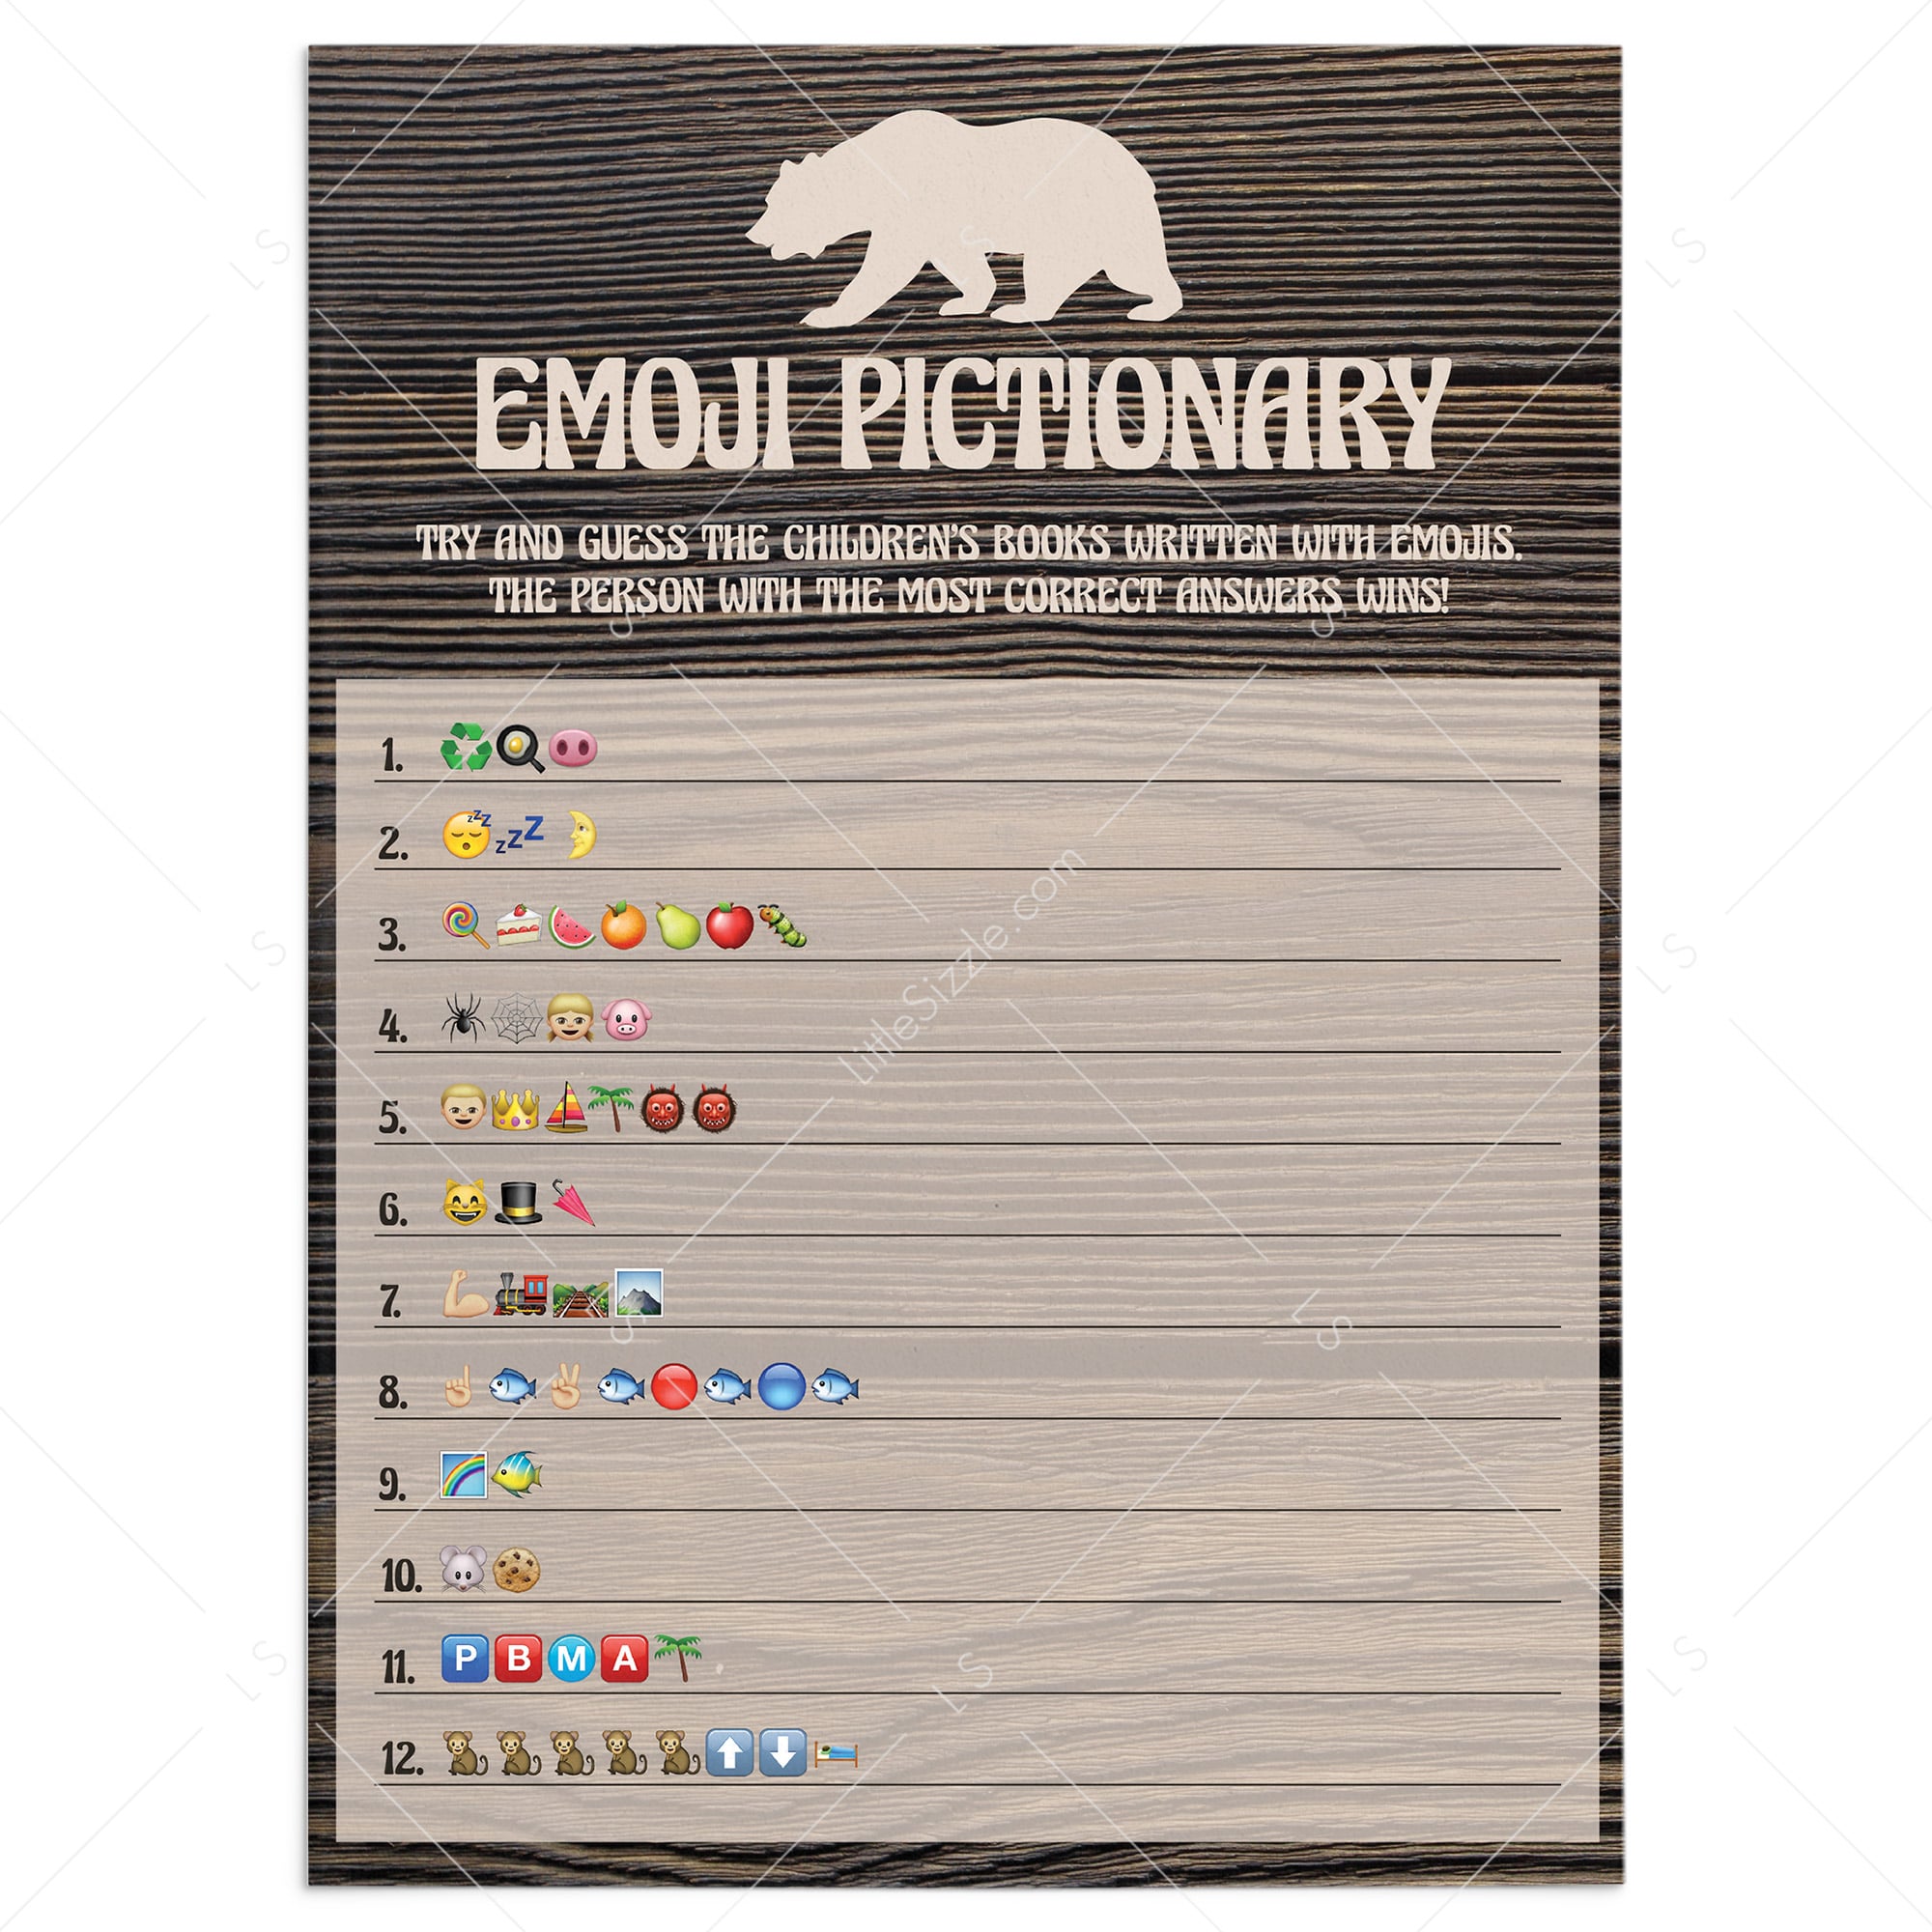 Woodland Theme baby shower emoji pictionary printable game by LittleSizzle